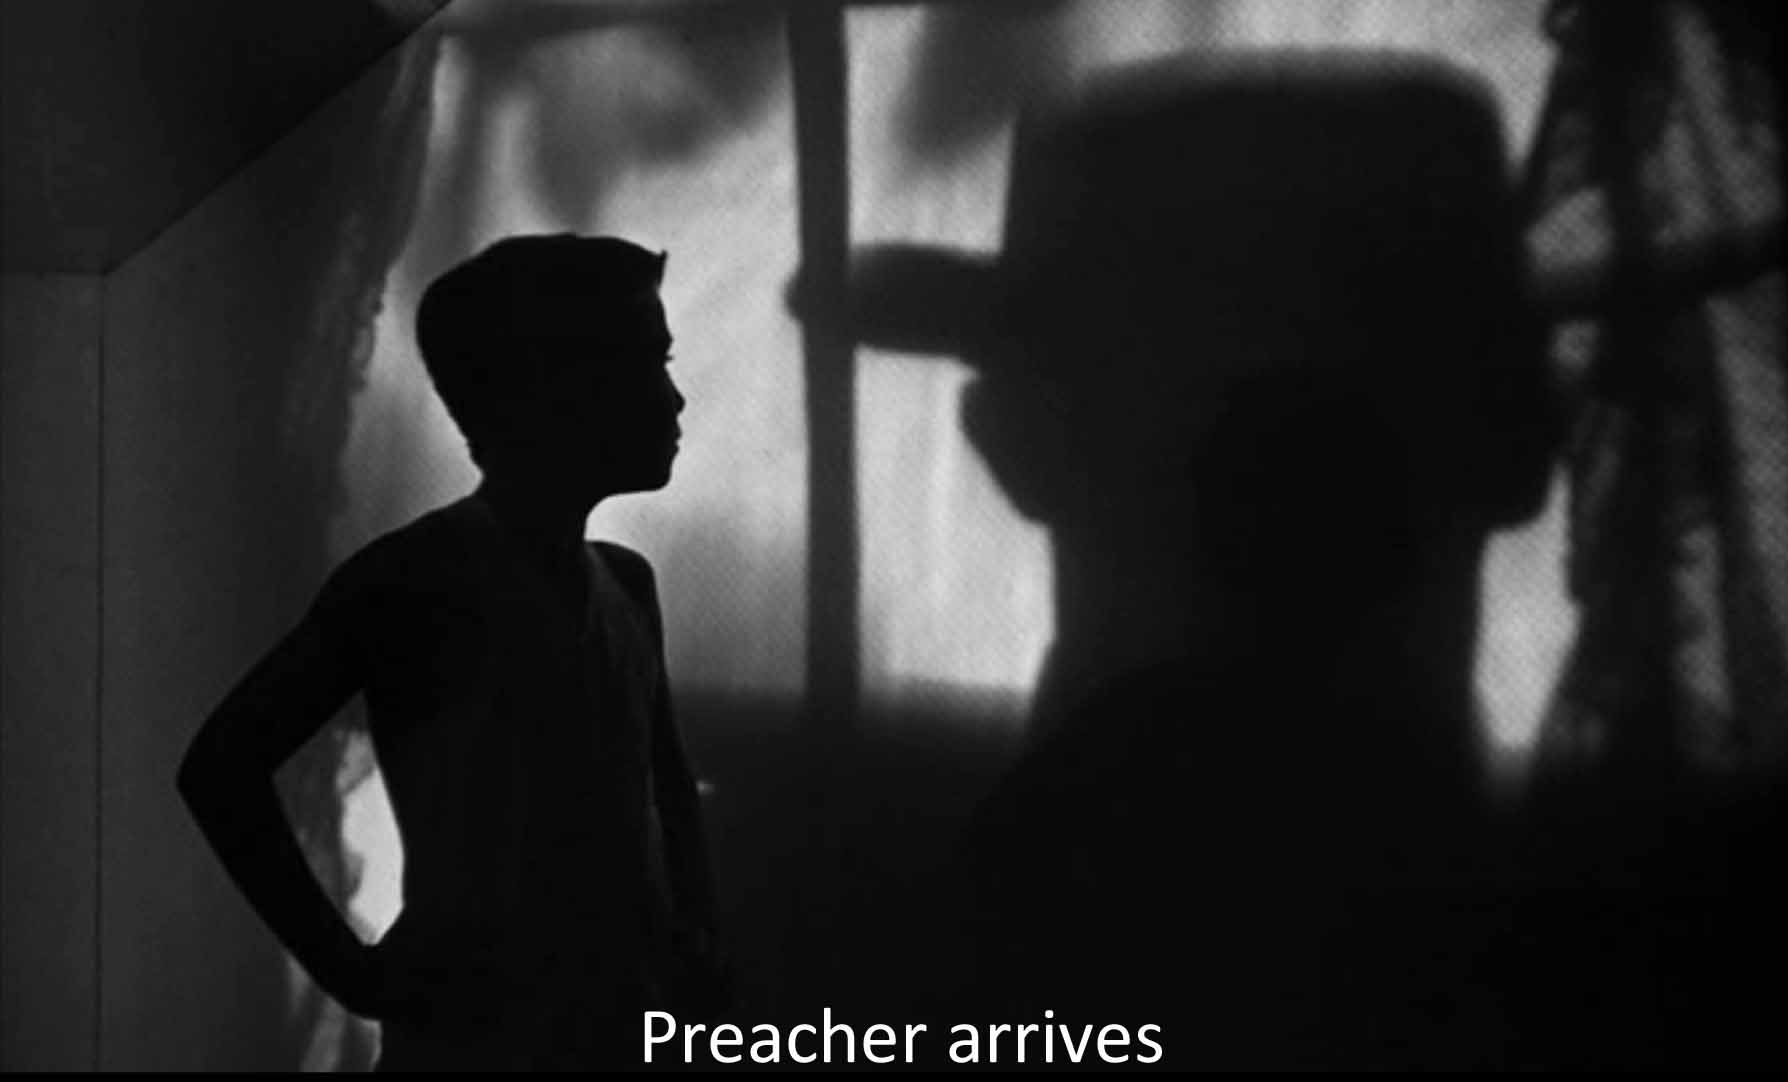 Preacher arrives